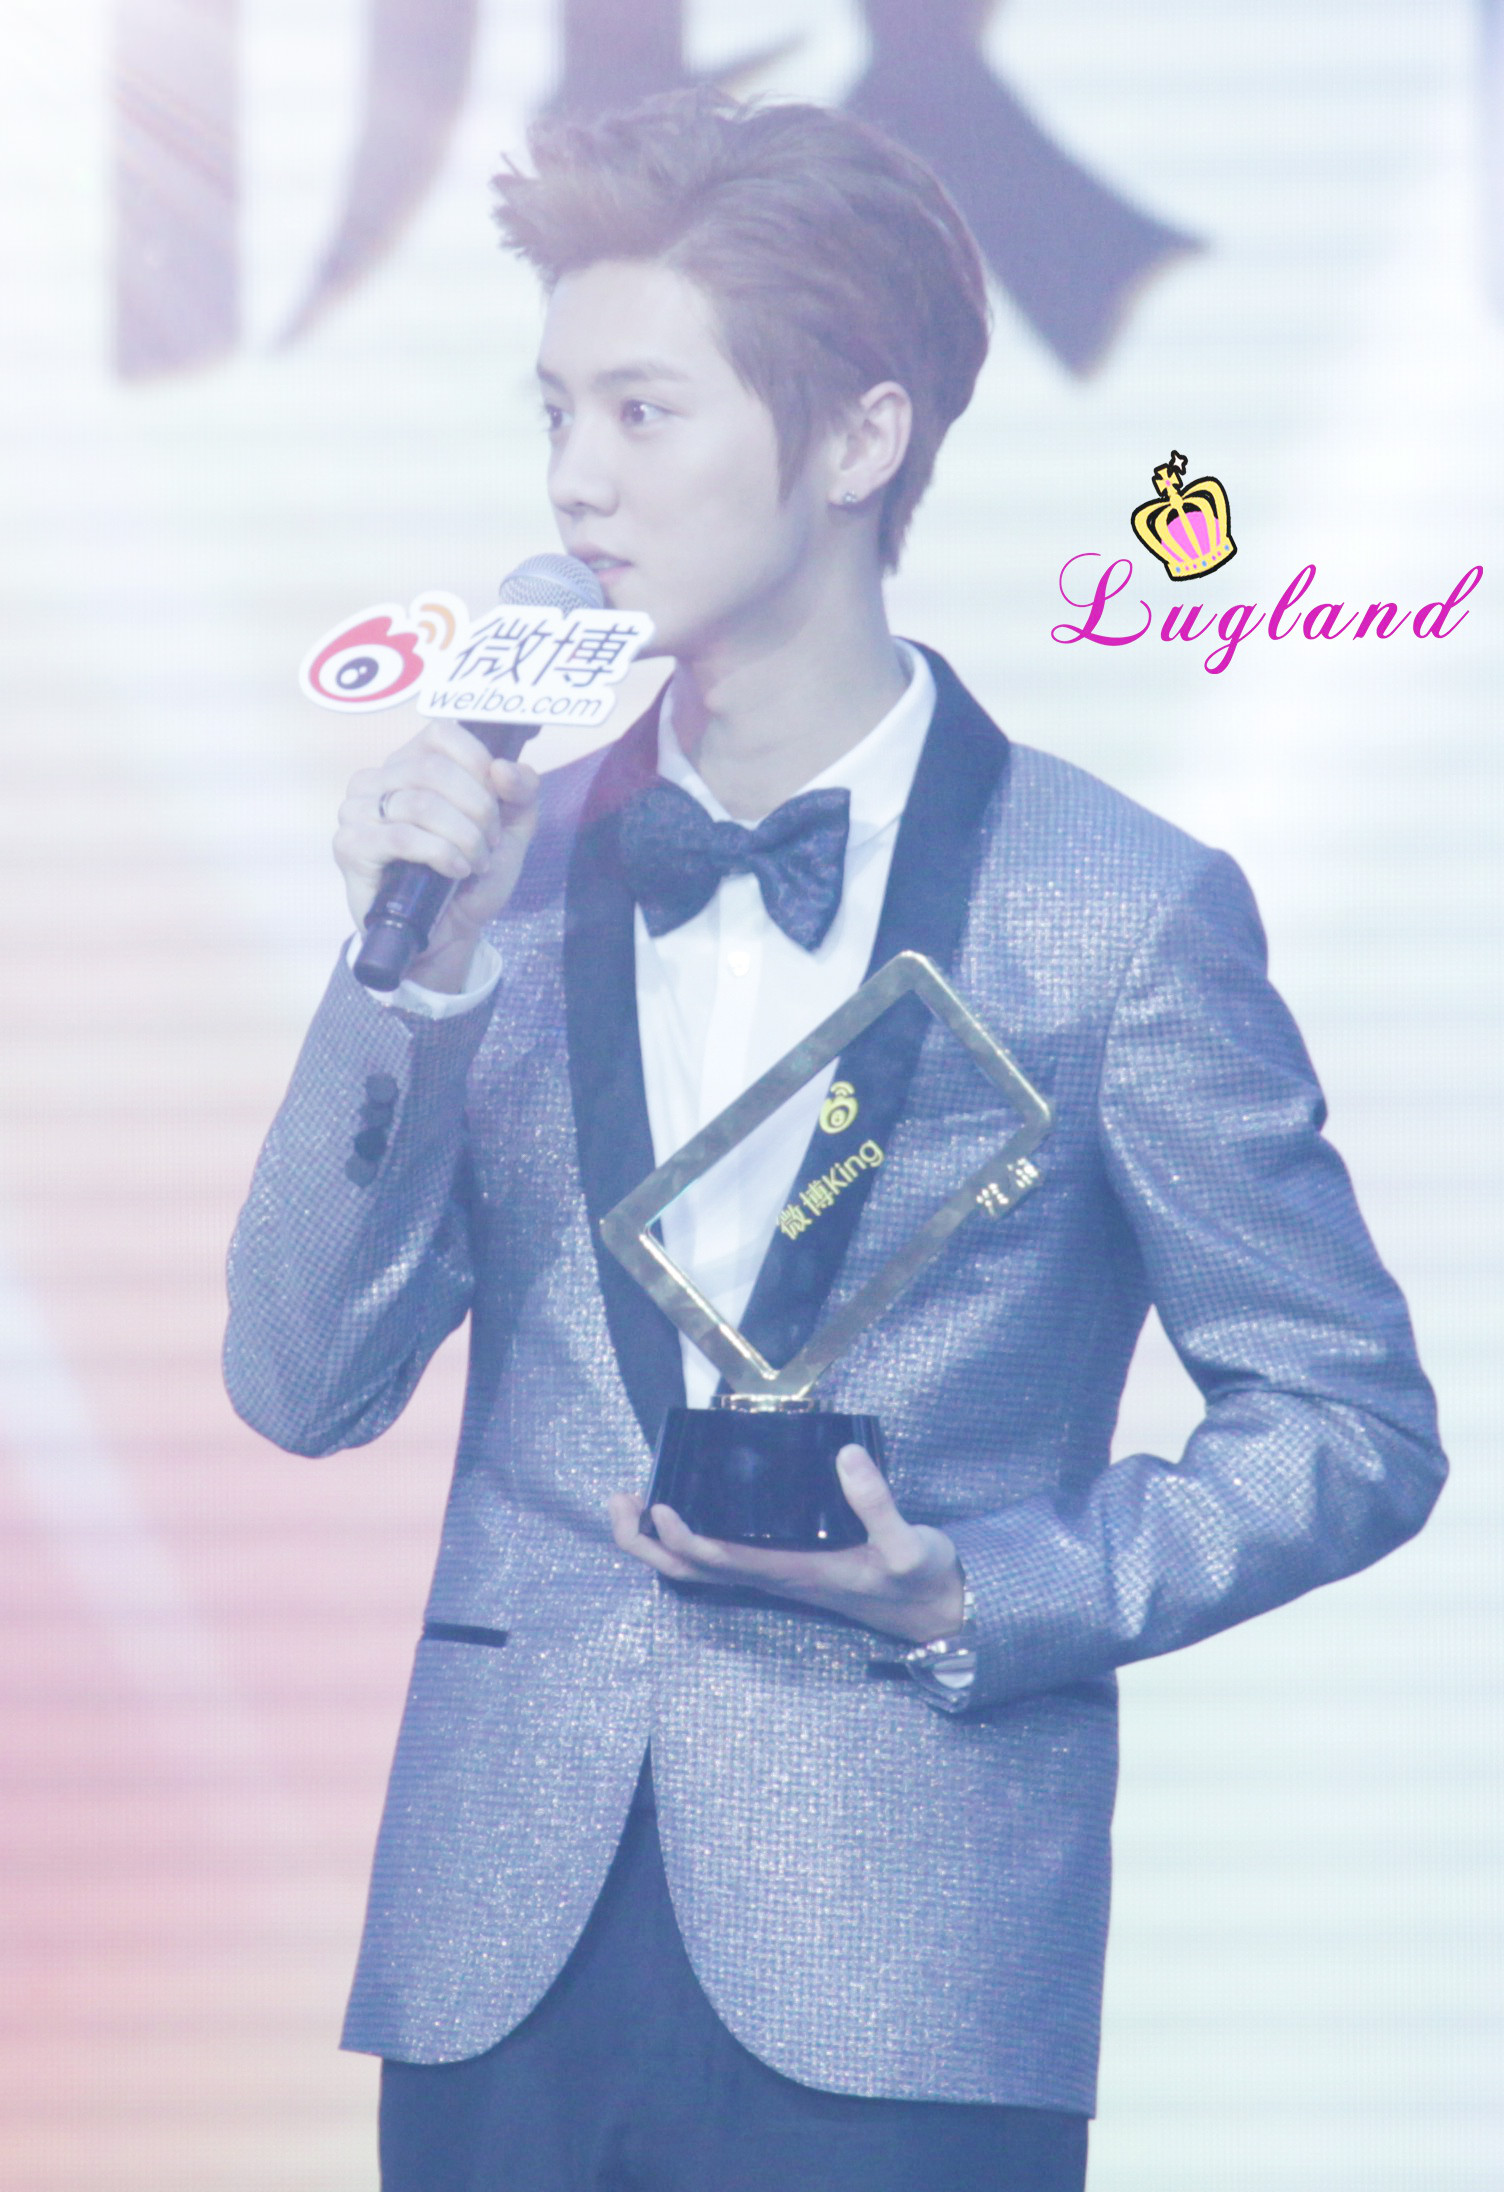 [FANTAKEN] 150115 2014 Weibo Awards Night [100P] 005KJncKjw1eocscaotdej315s1owncg